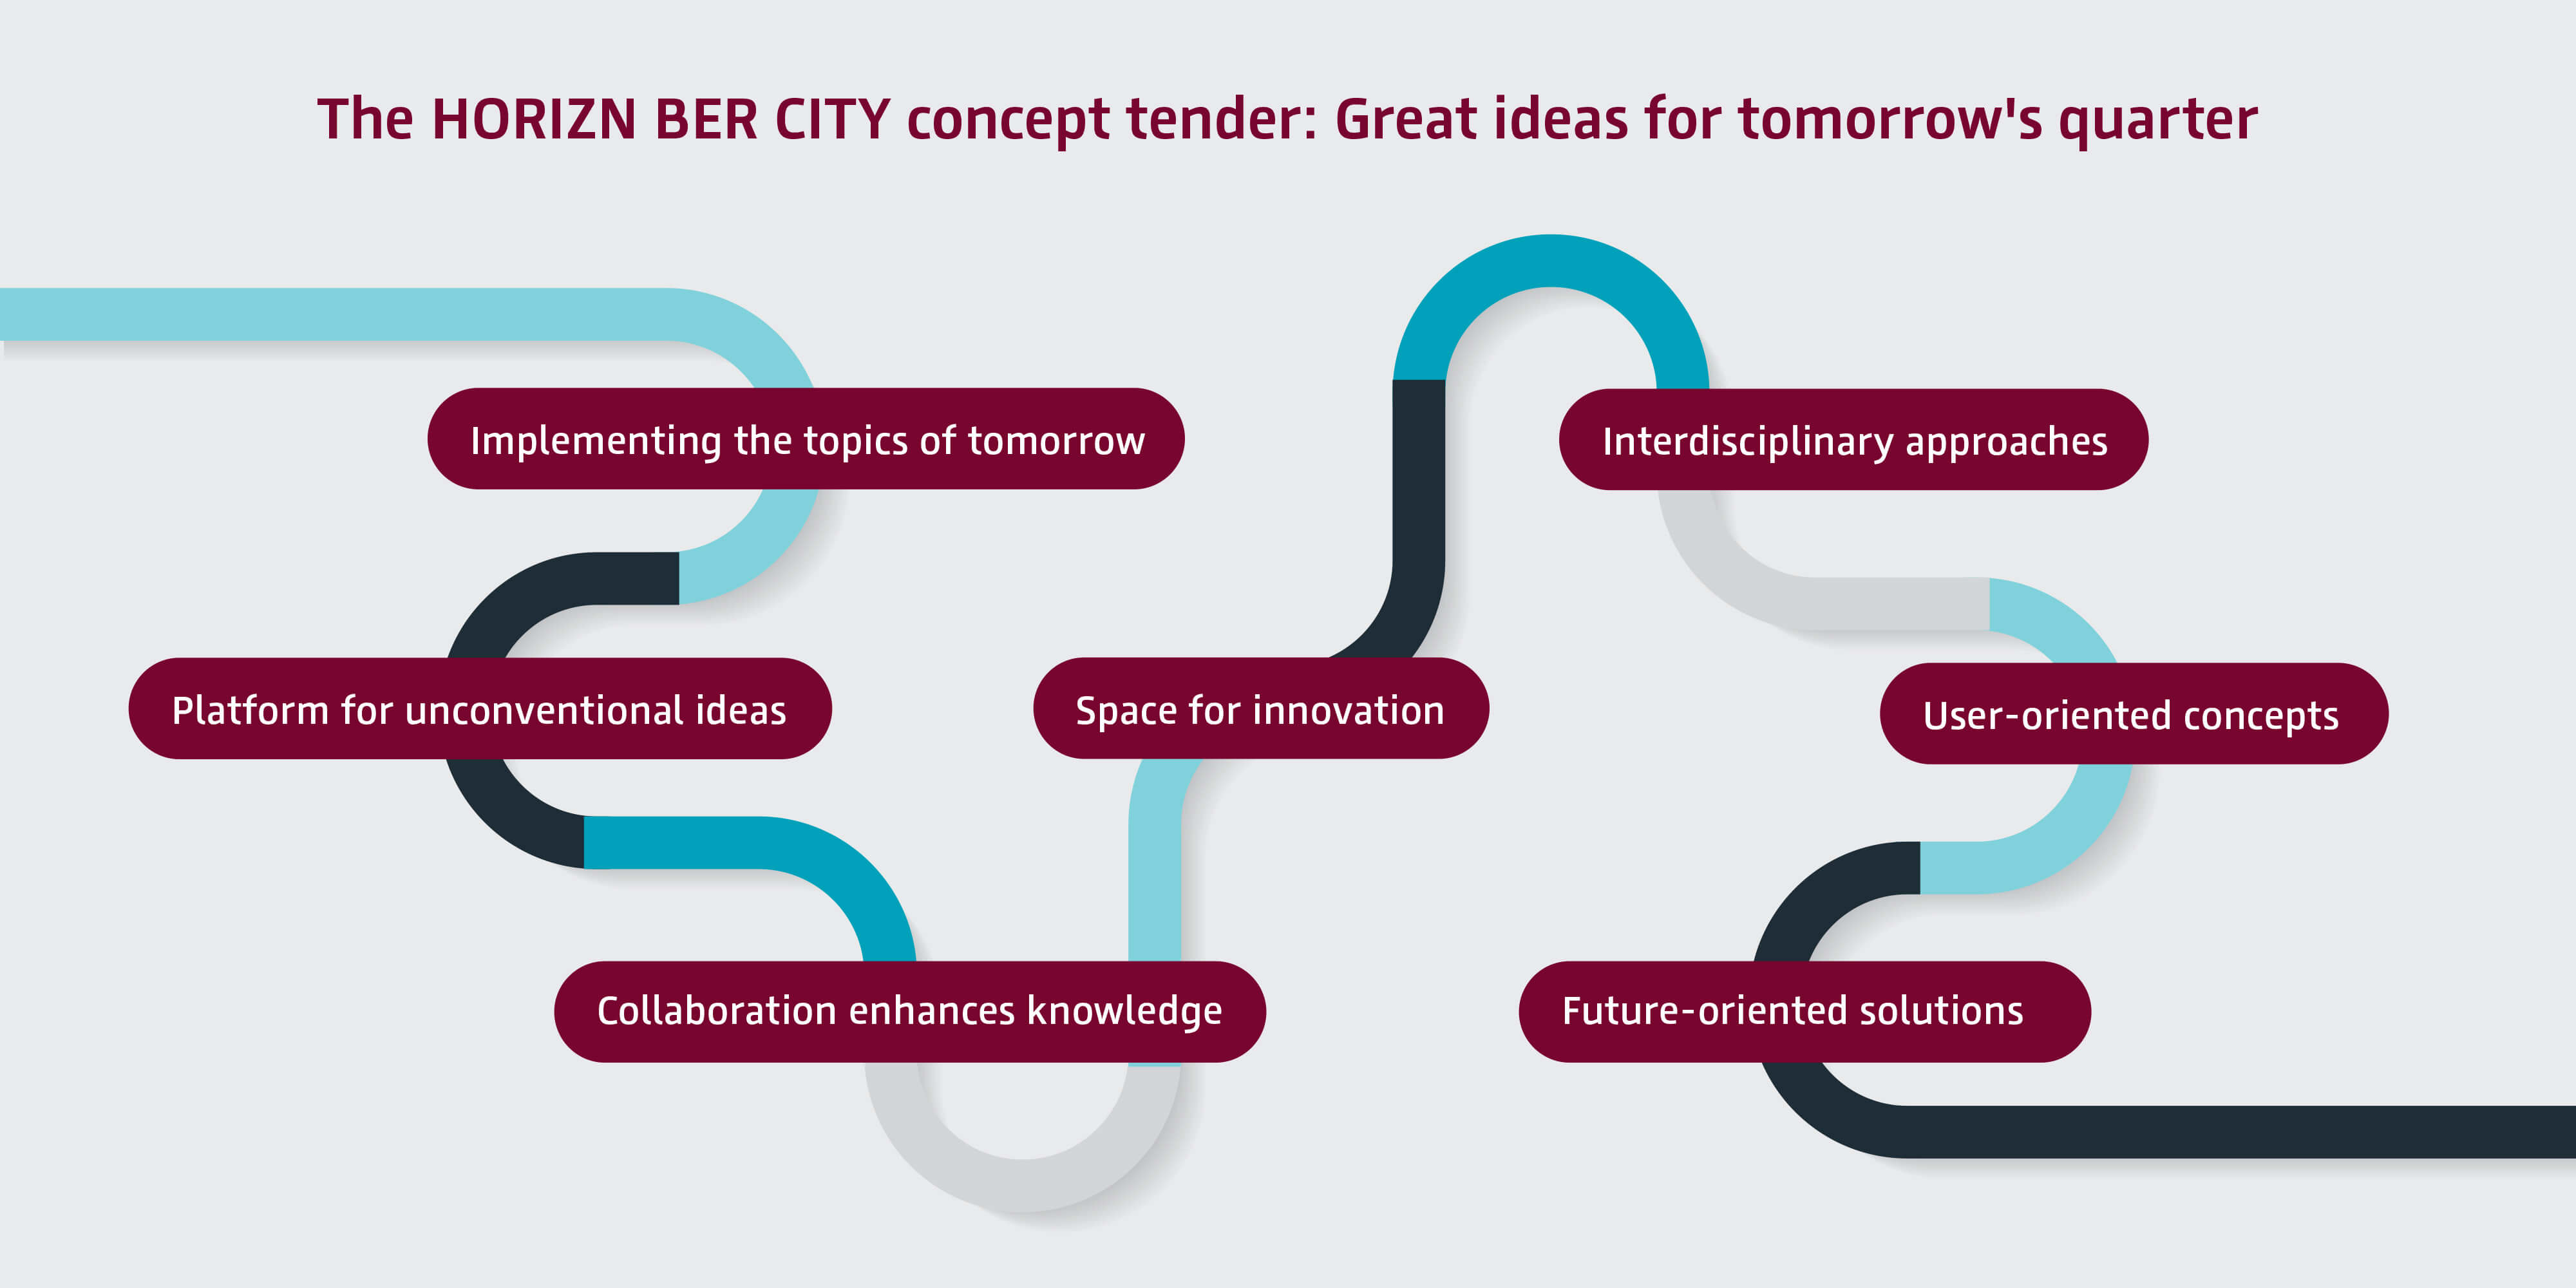 HORIZN BER CITY opportunities of the concept tender process © FBB